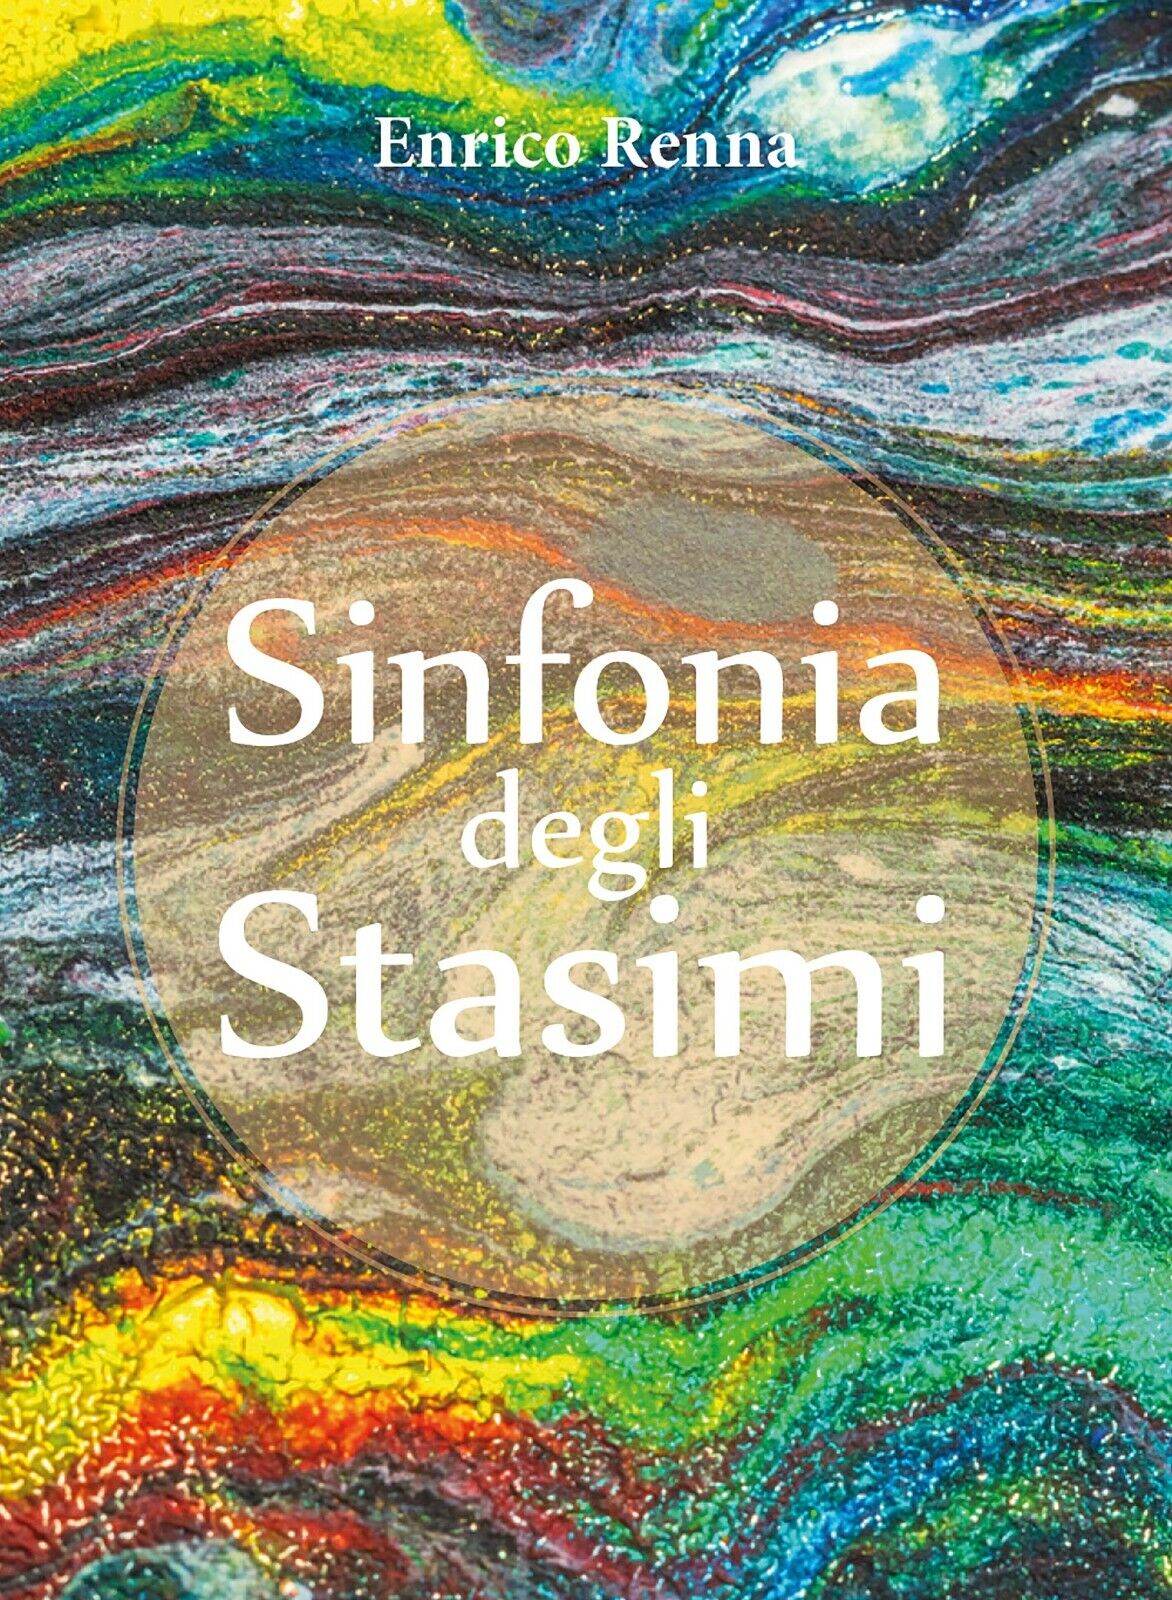 Sinfonia degli stasimi di Enrico Renna,  2018,  Youcanprint